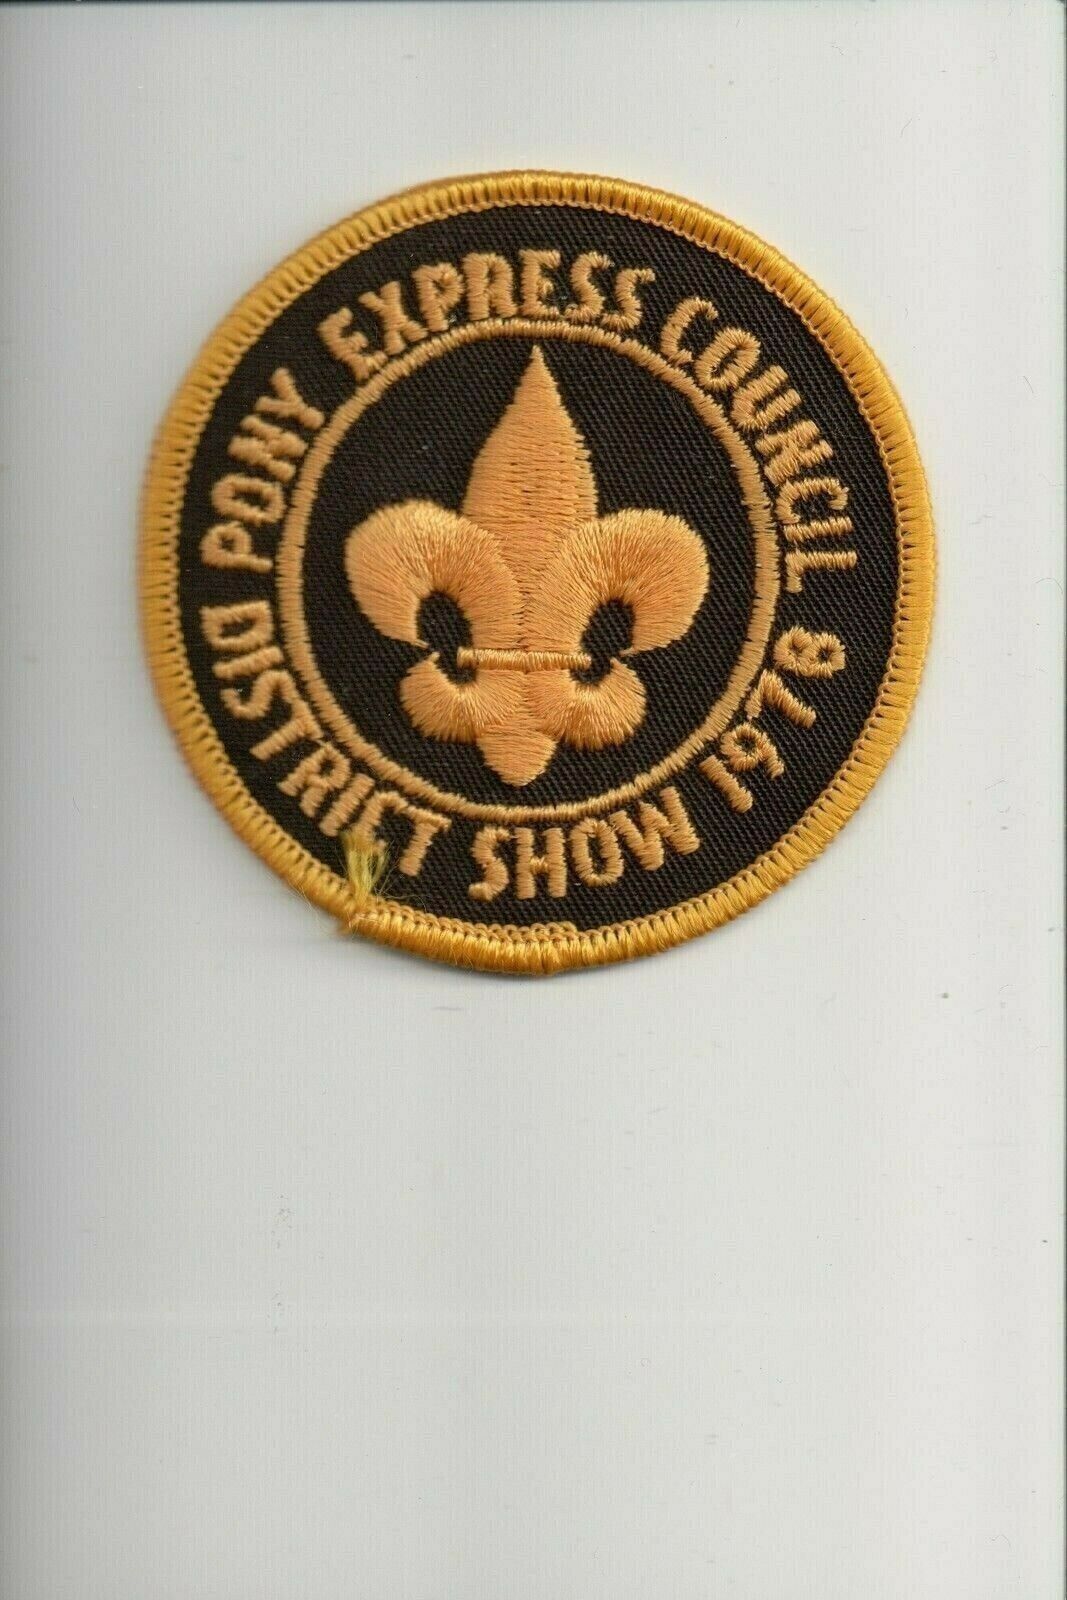 1978 Pony Express Council District Show patch